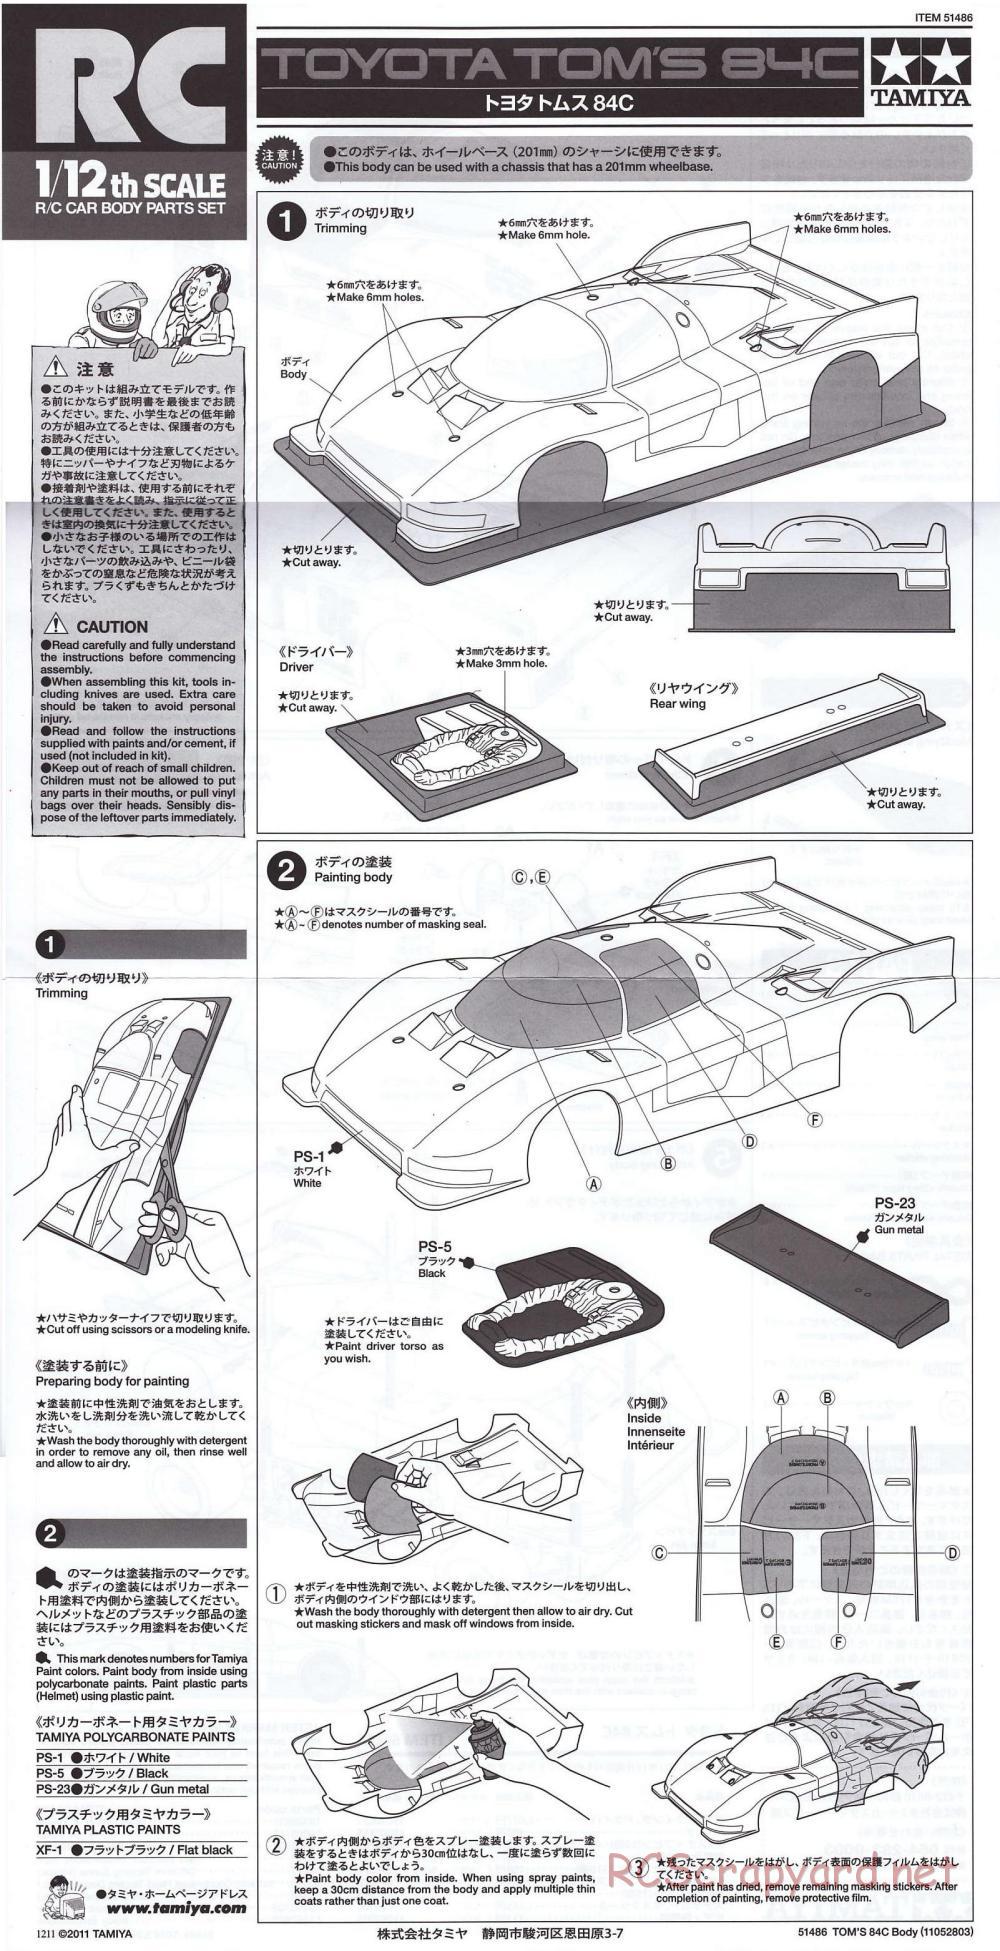 Tamiya - Toyota Tom's 84C - RM-01 Chassis - Body Manual - Page 1